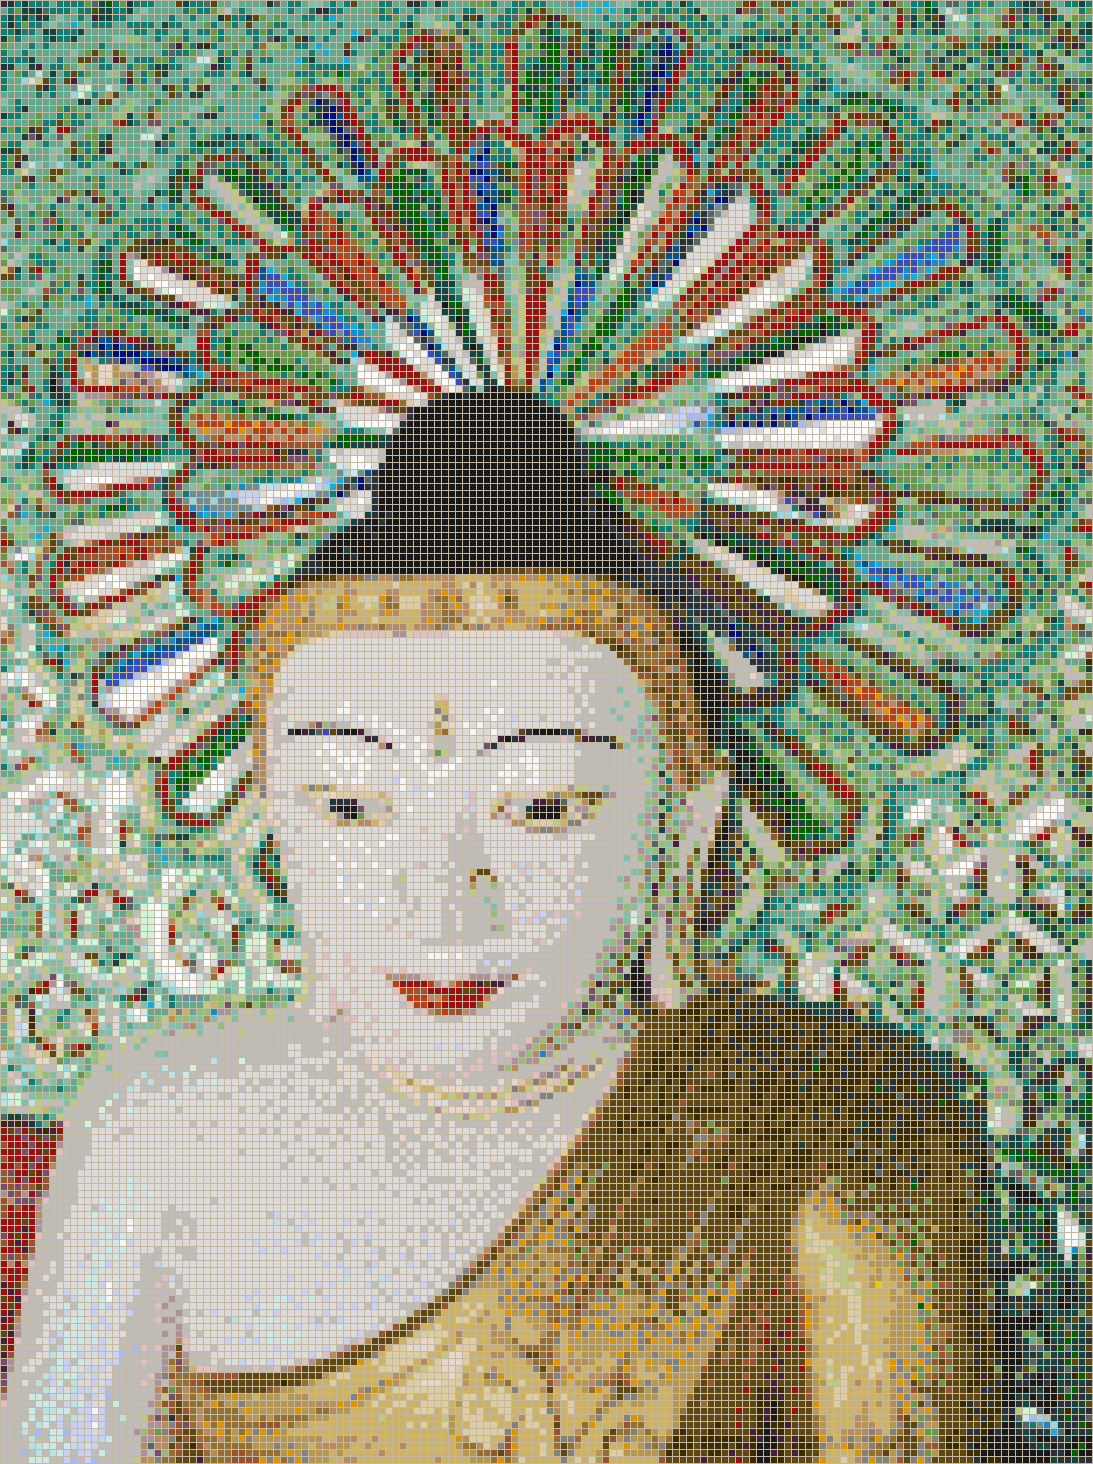 Buddah Statue (U Min Thonze, Myanmar) - Mosaic Tile Art